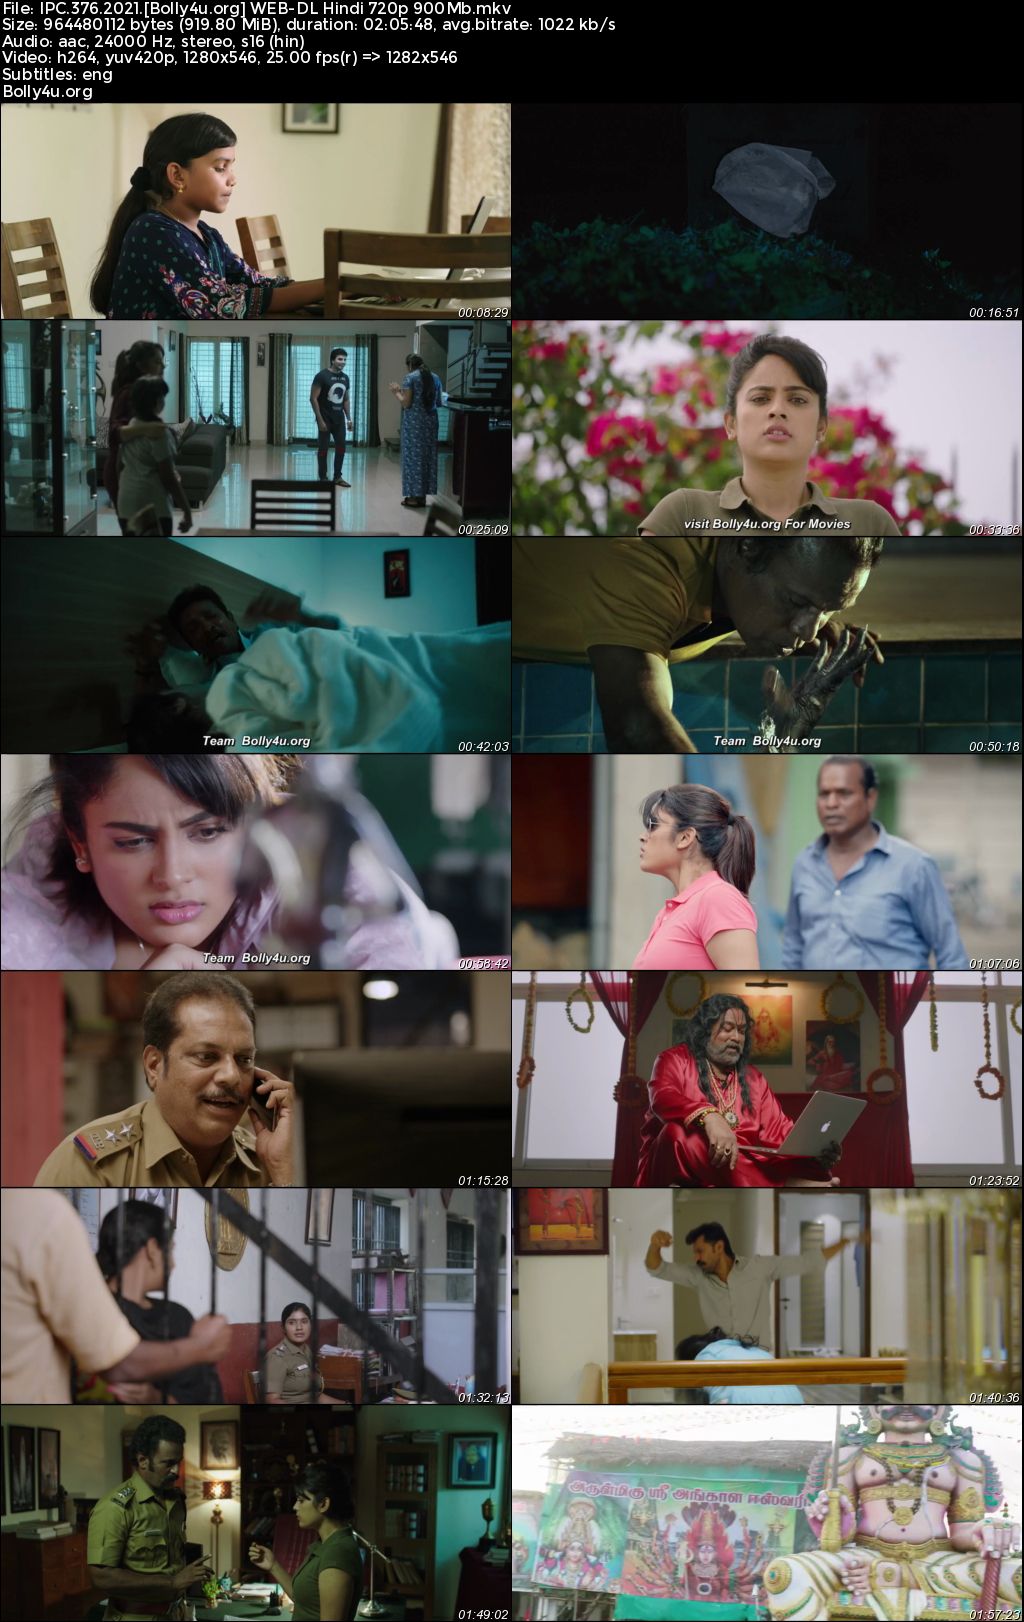 IPC 376 2021 WEB-DL Hindi Full Movie Download 1080p 720p 480p